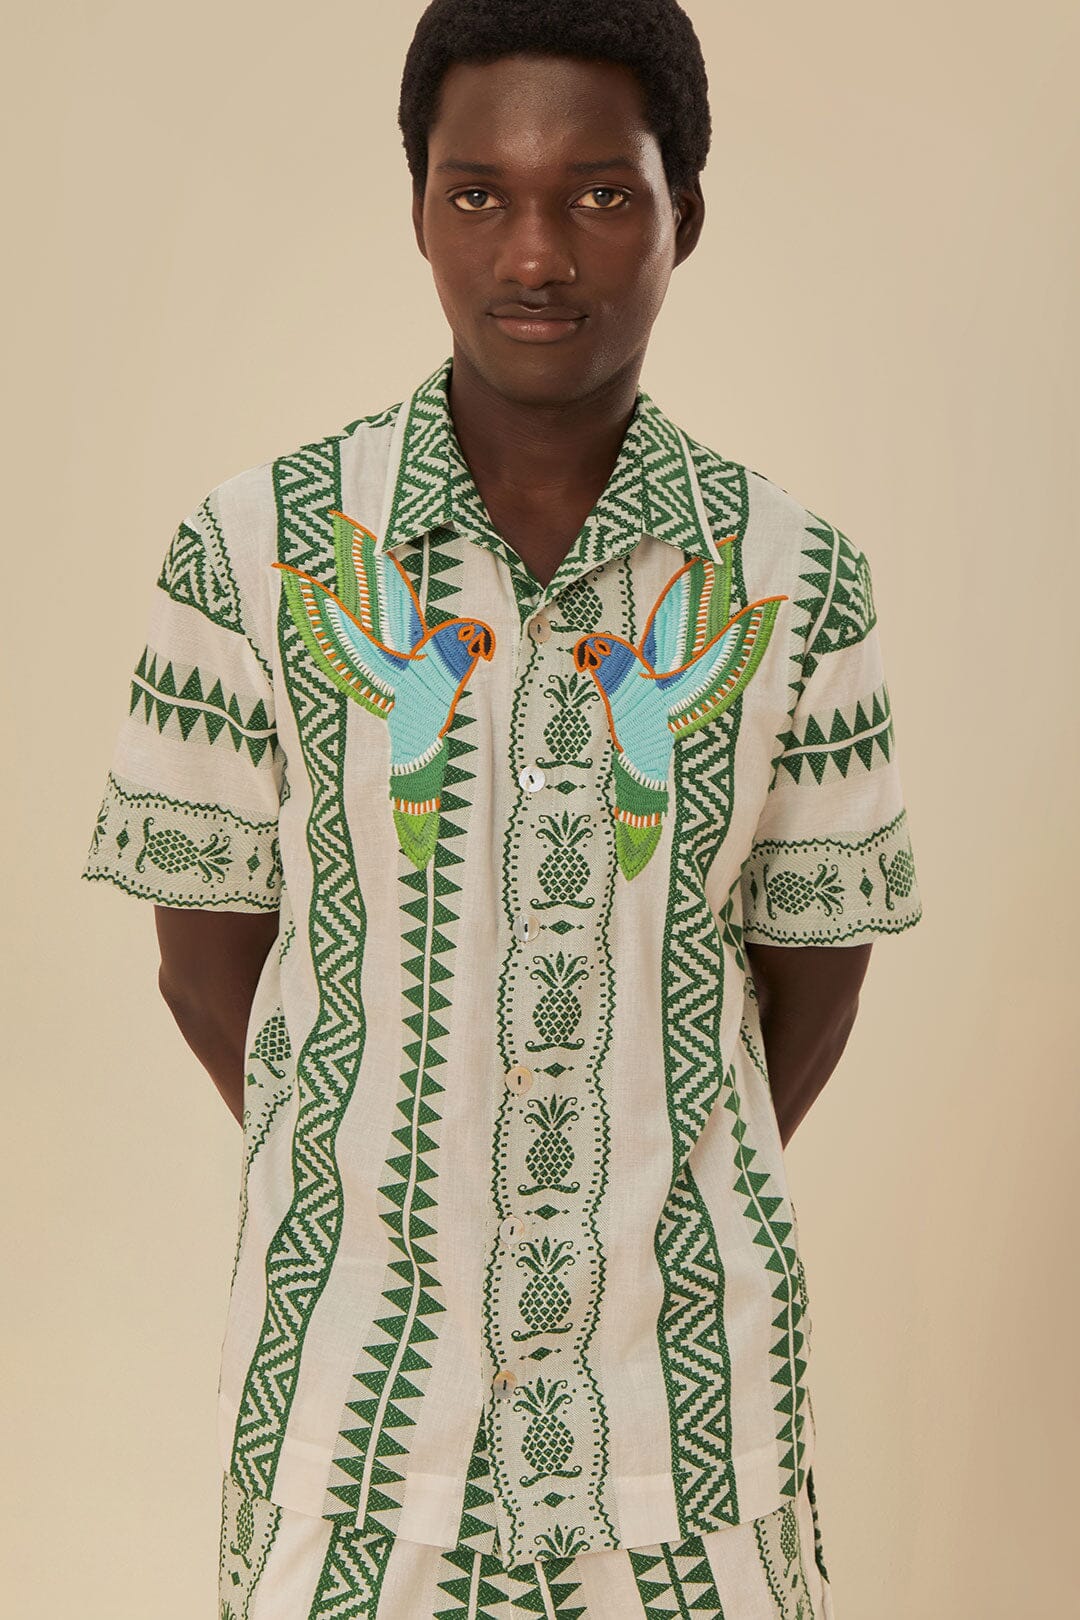 Pineapple Jacquard Embroidered Shirt